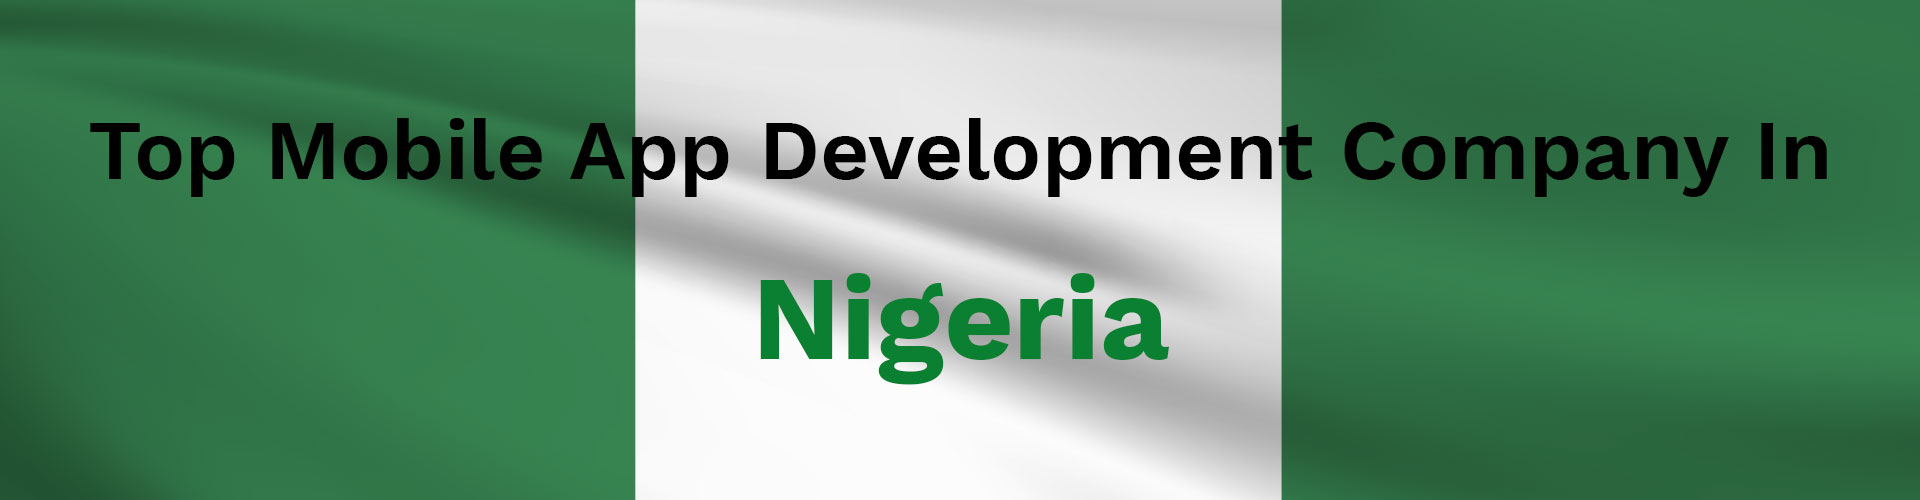 mobile app development company nigeria